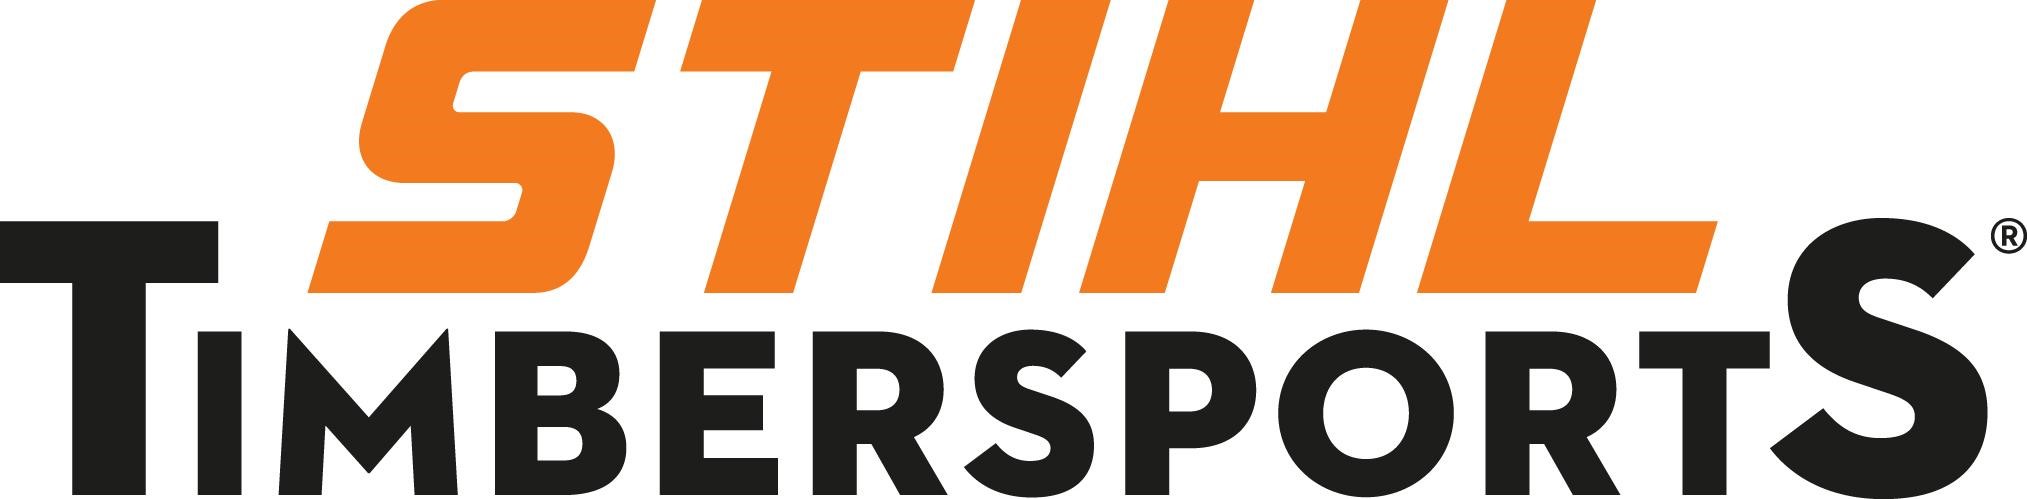 Stihl Timbersports logo